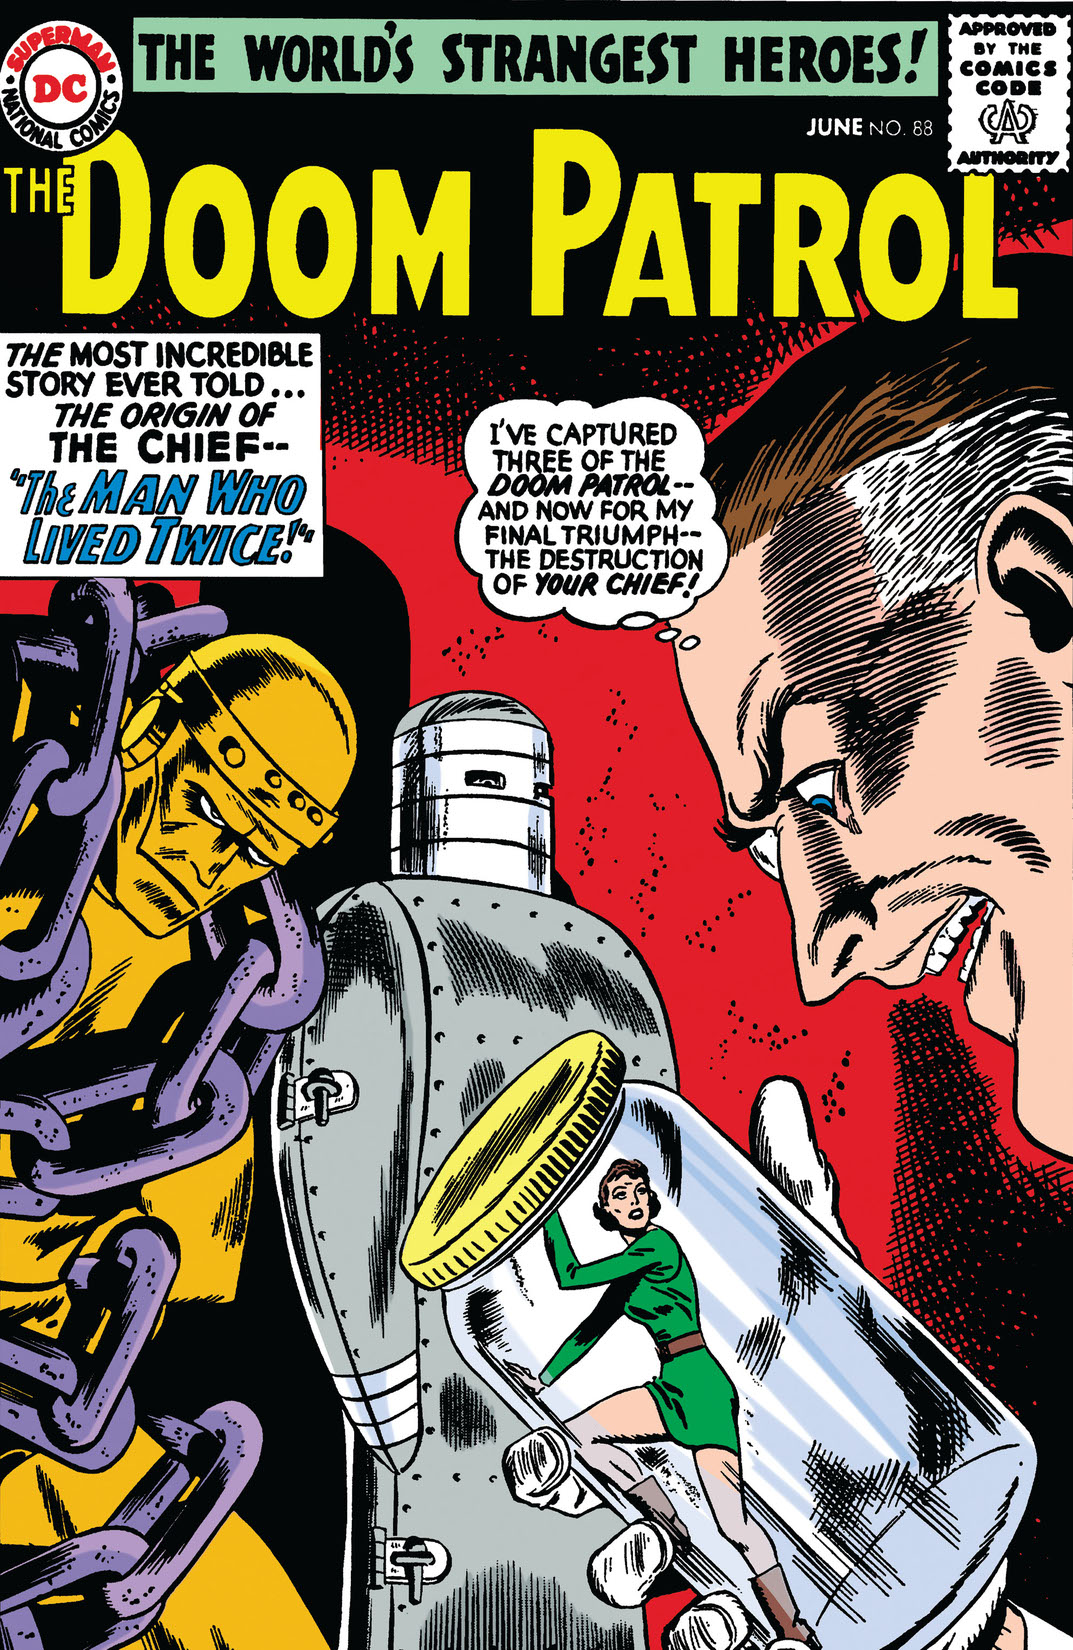 Doom Patrol (1964-) #88 preview images